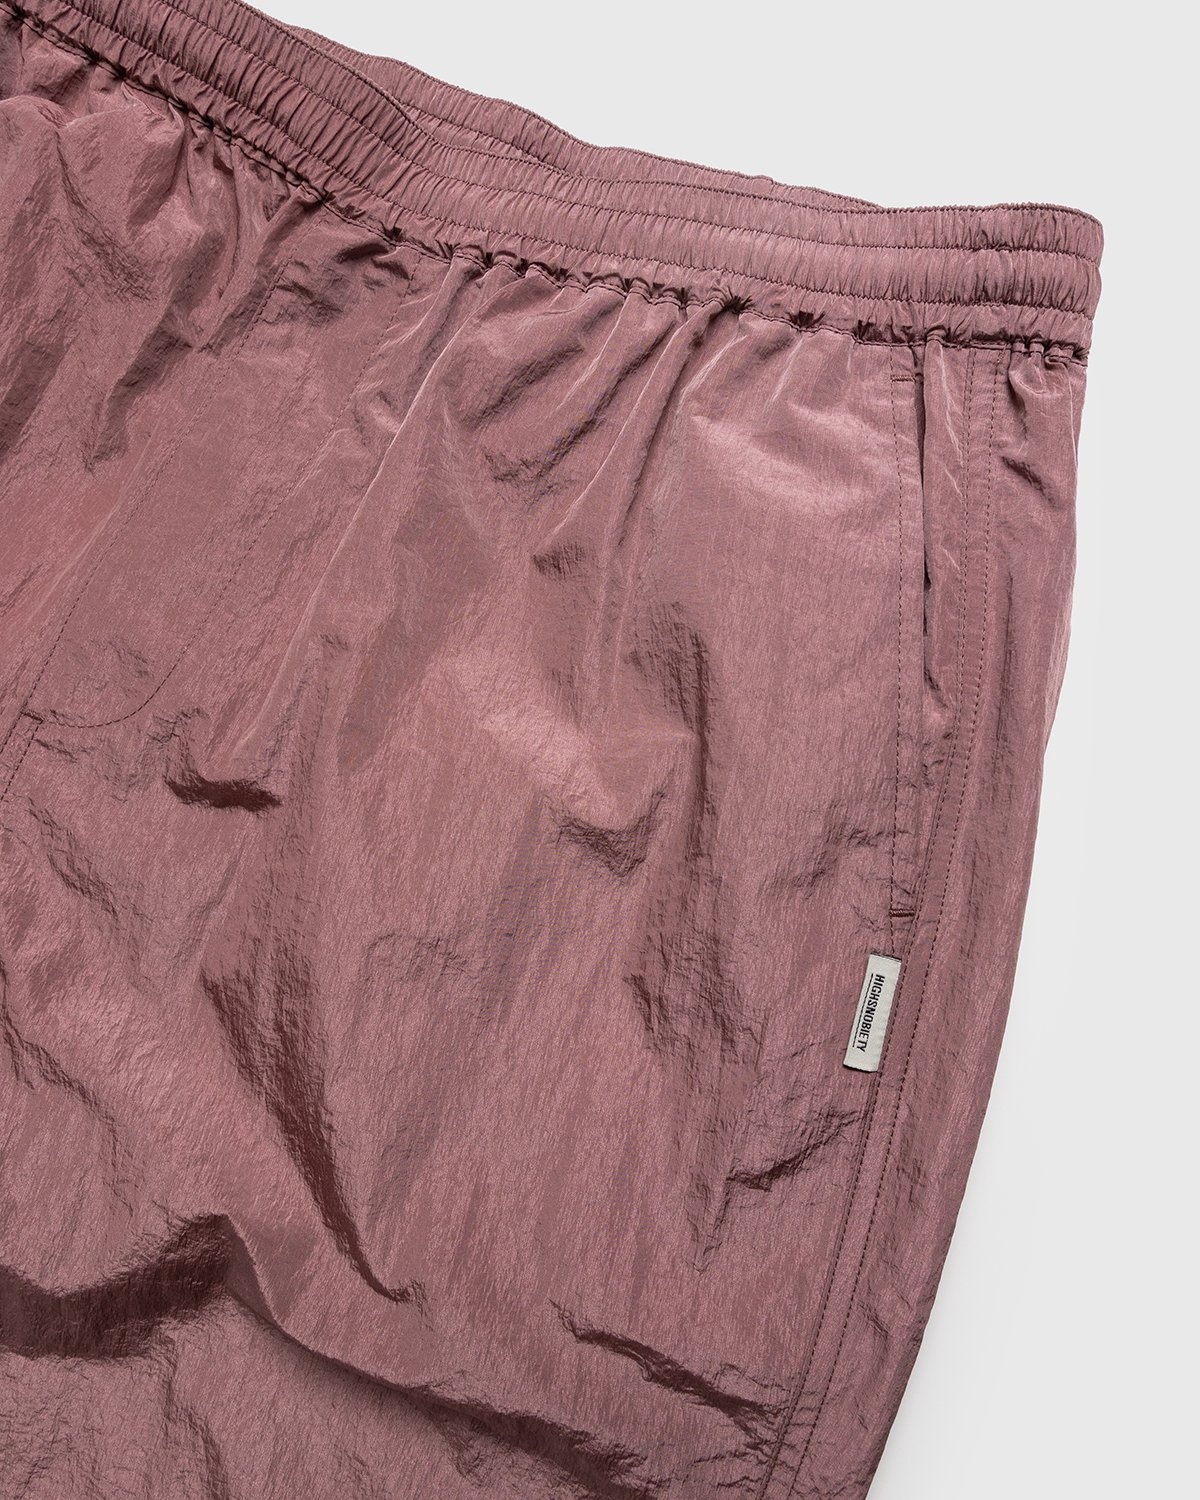 Highsnobiety – Crepe Nylon Elastic Pants Rose Gold - Active Pants - Pink - Image 4